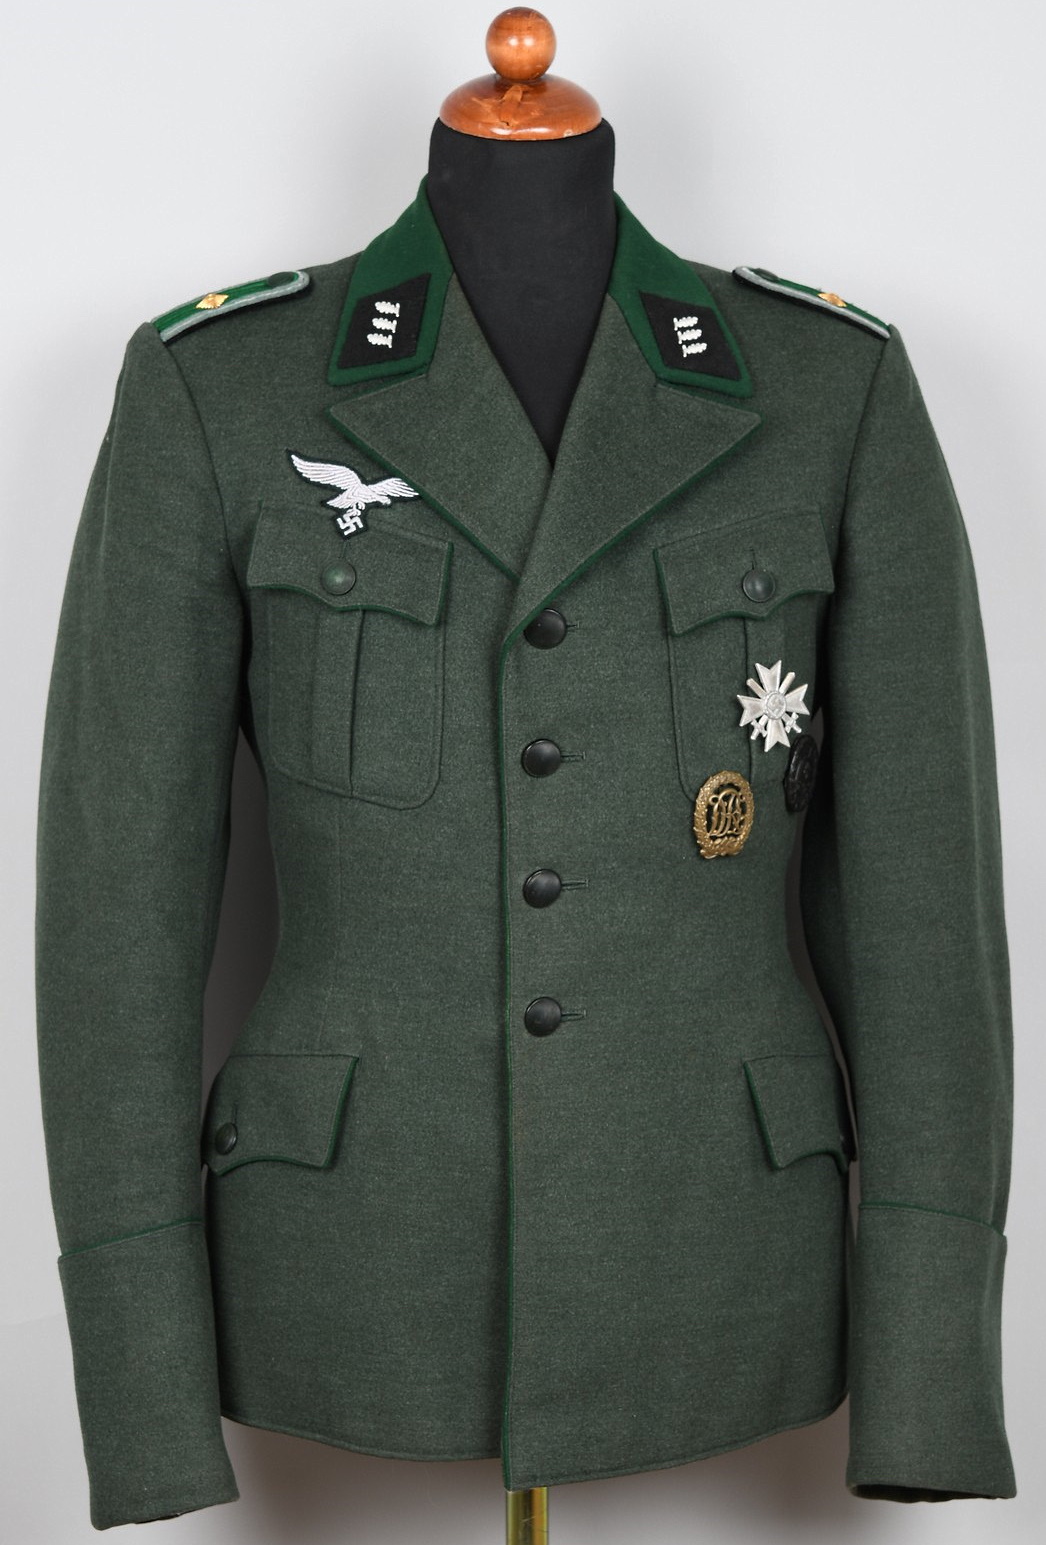 Luftwaffe Hilfsforster's Forestry Service Tunic